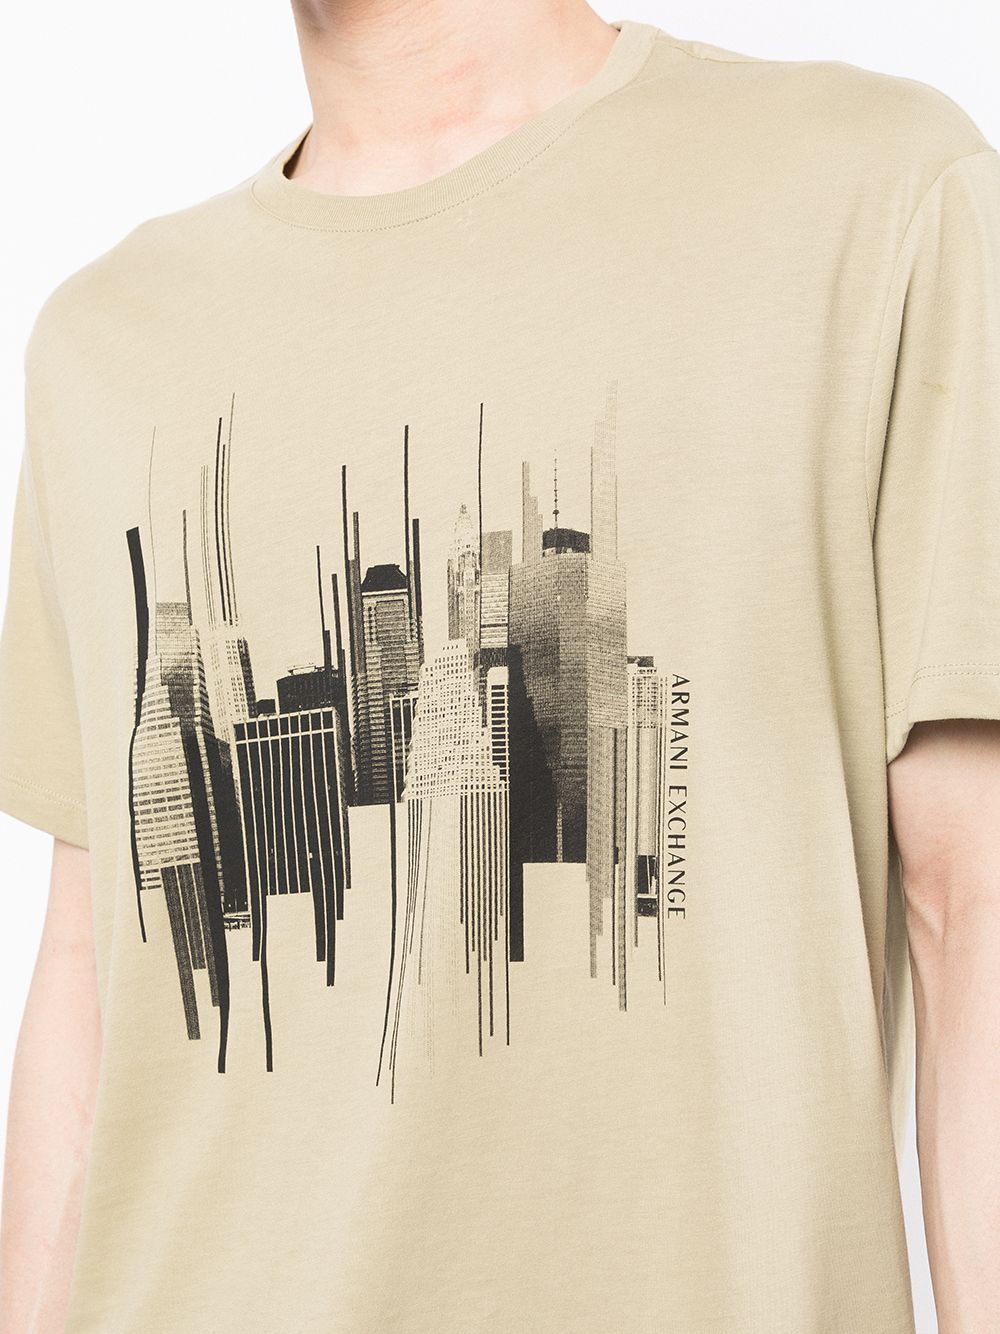 фото Armani exchange футболка с графичным принтом